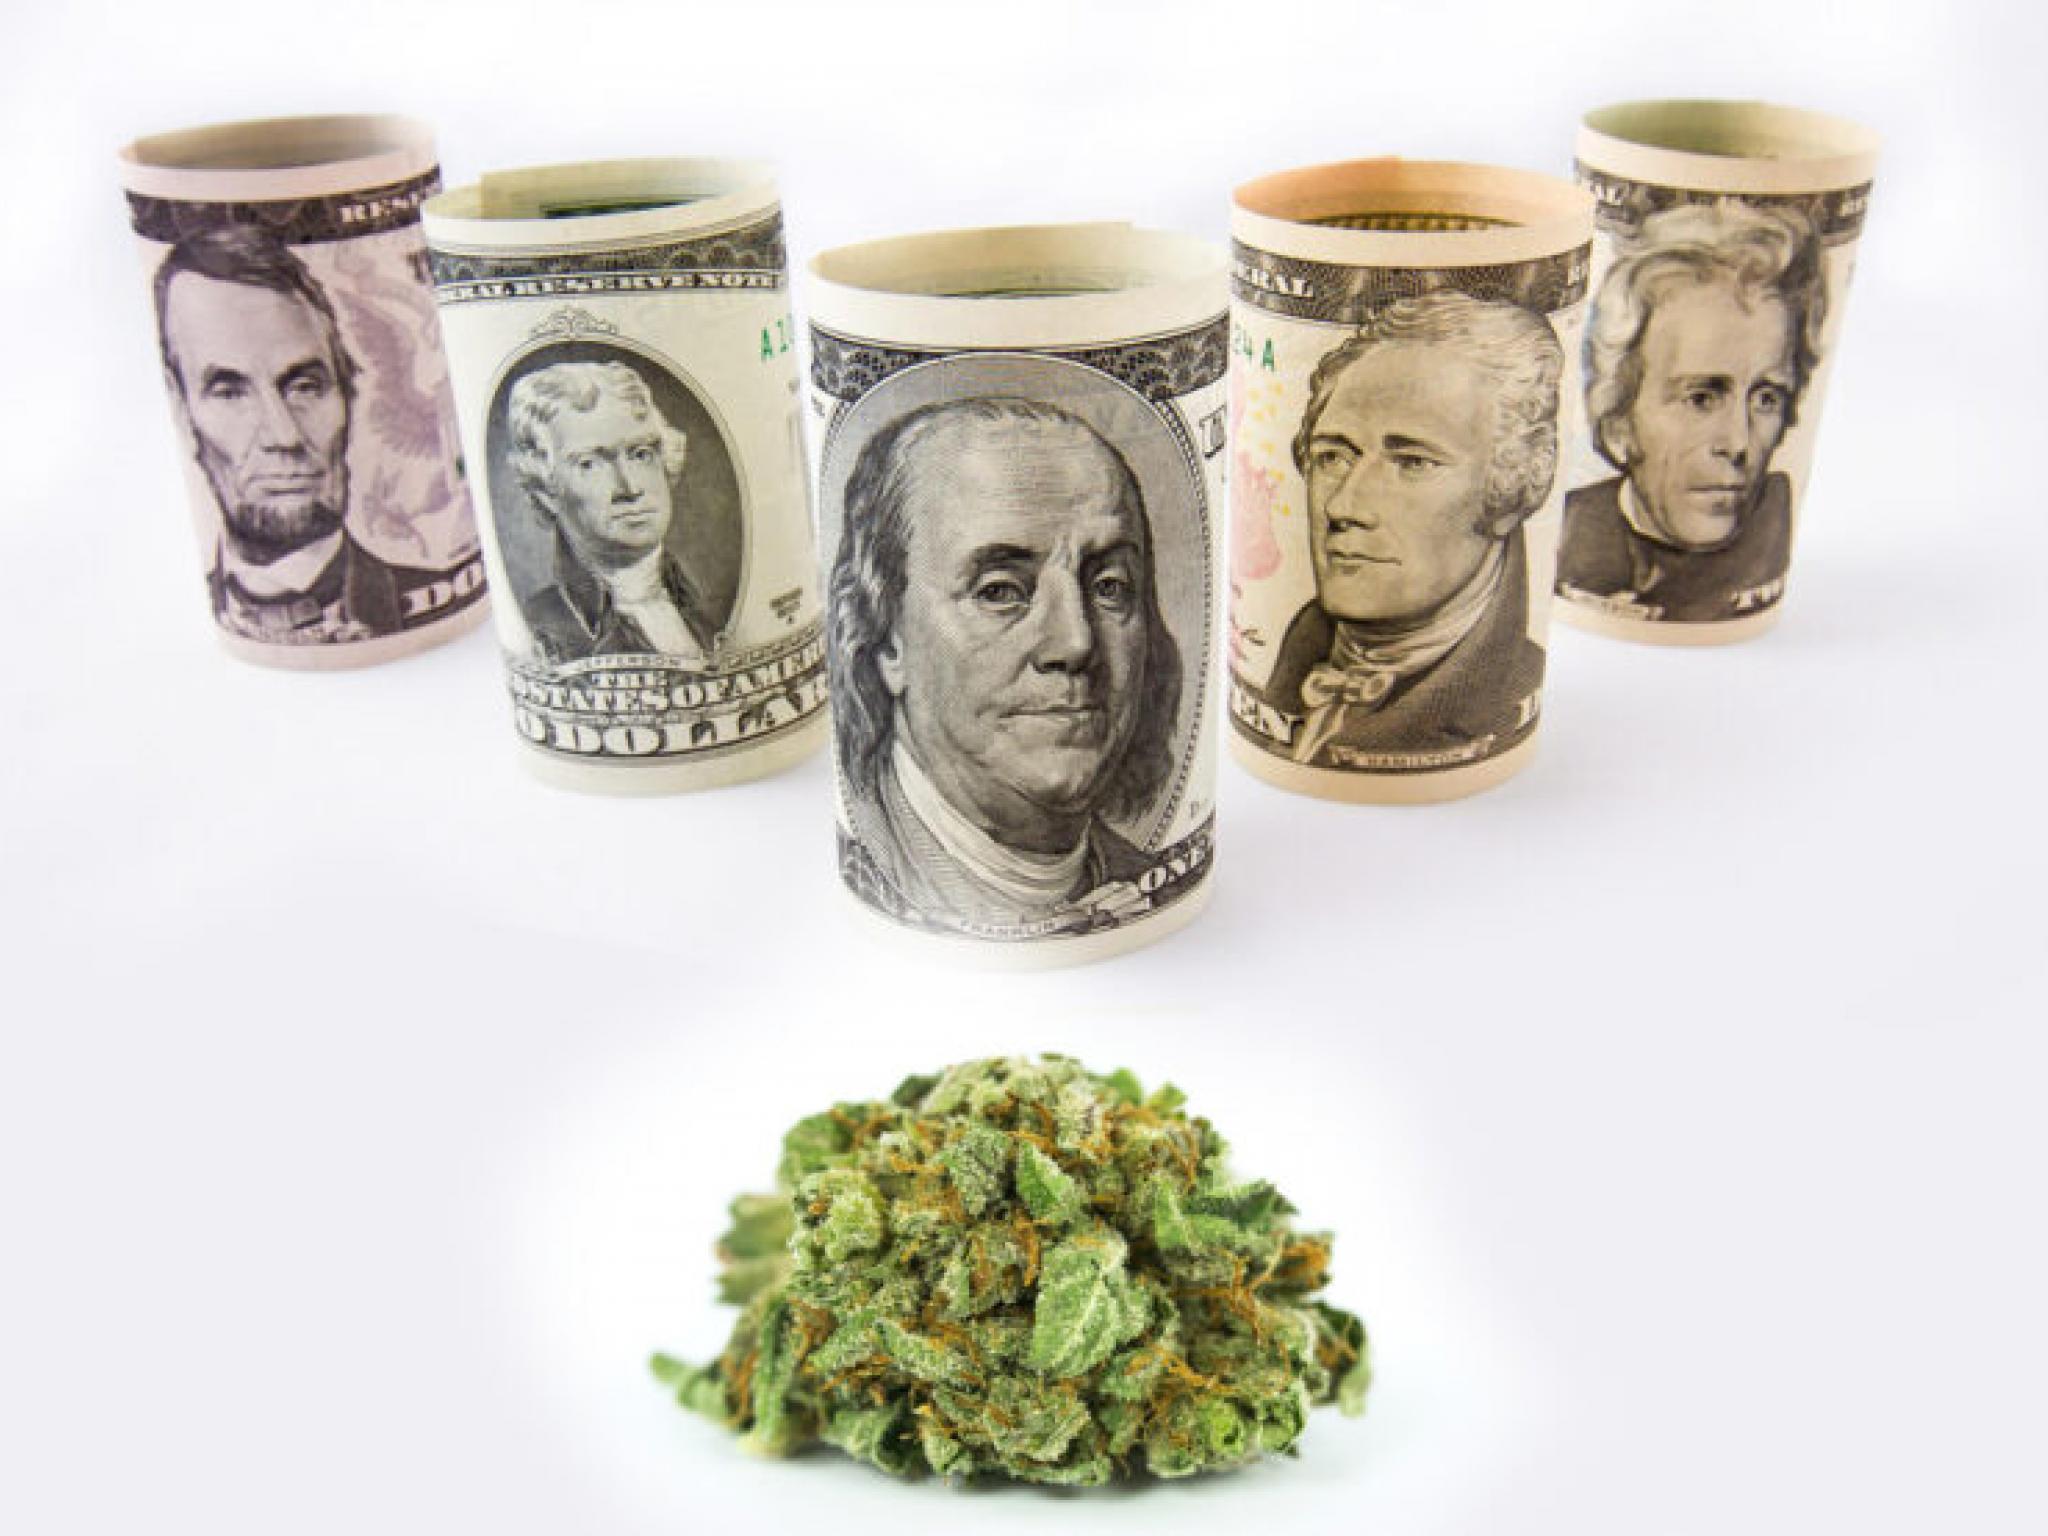  marijuana-fintech-co-posabit-reports-67-yoy-drop-in-q1-revenue-renews-focus-on-sustainable-profitability-and-growth 